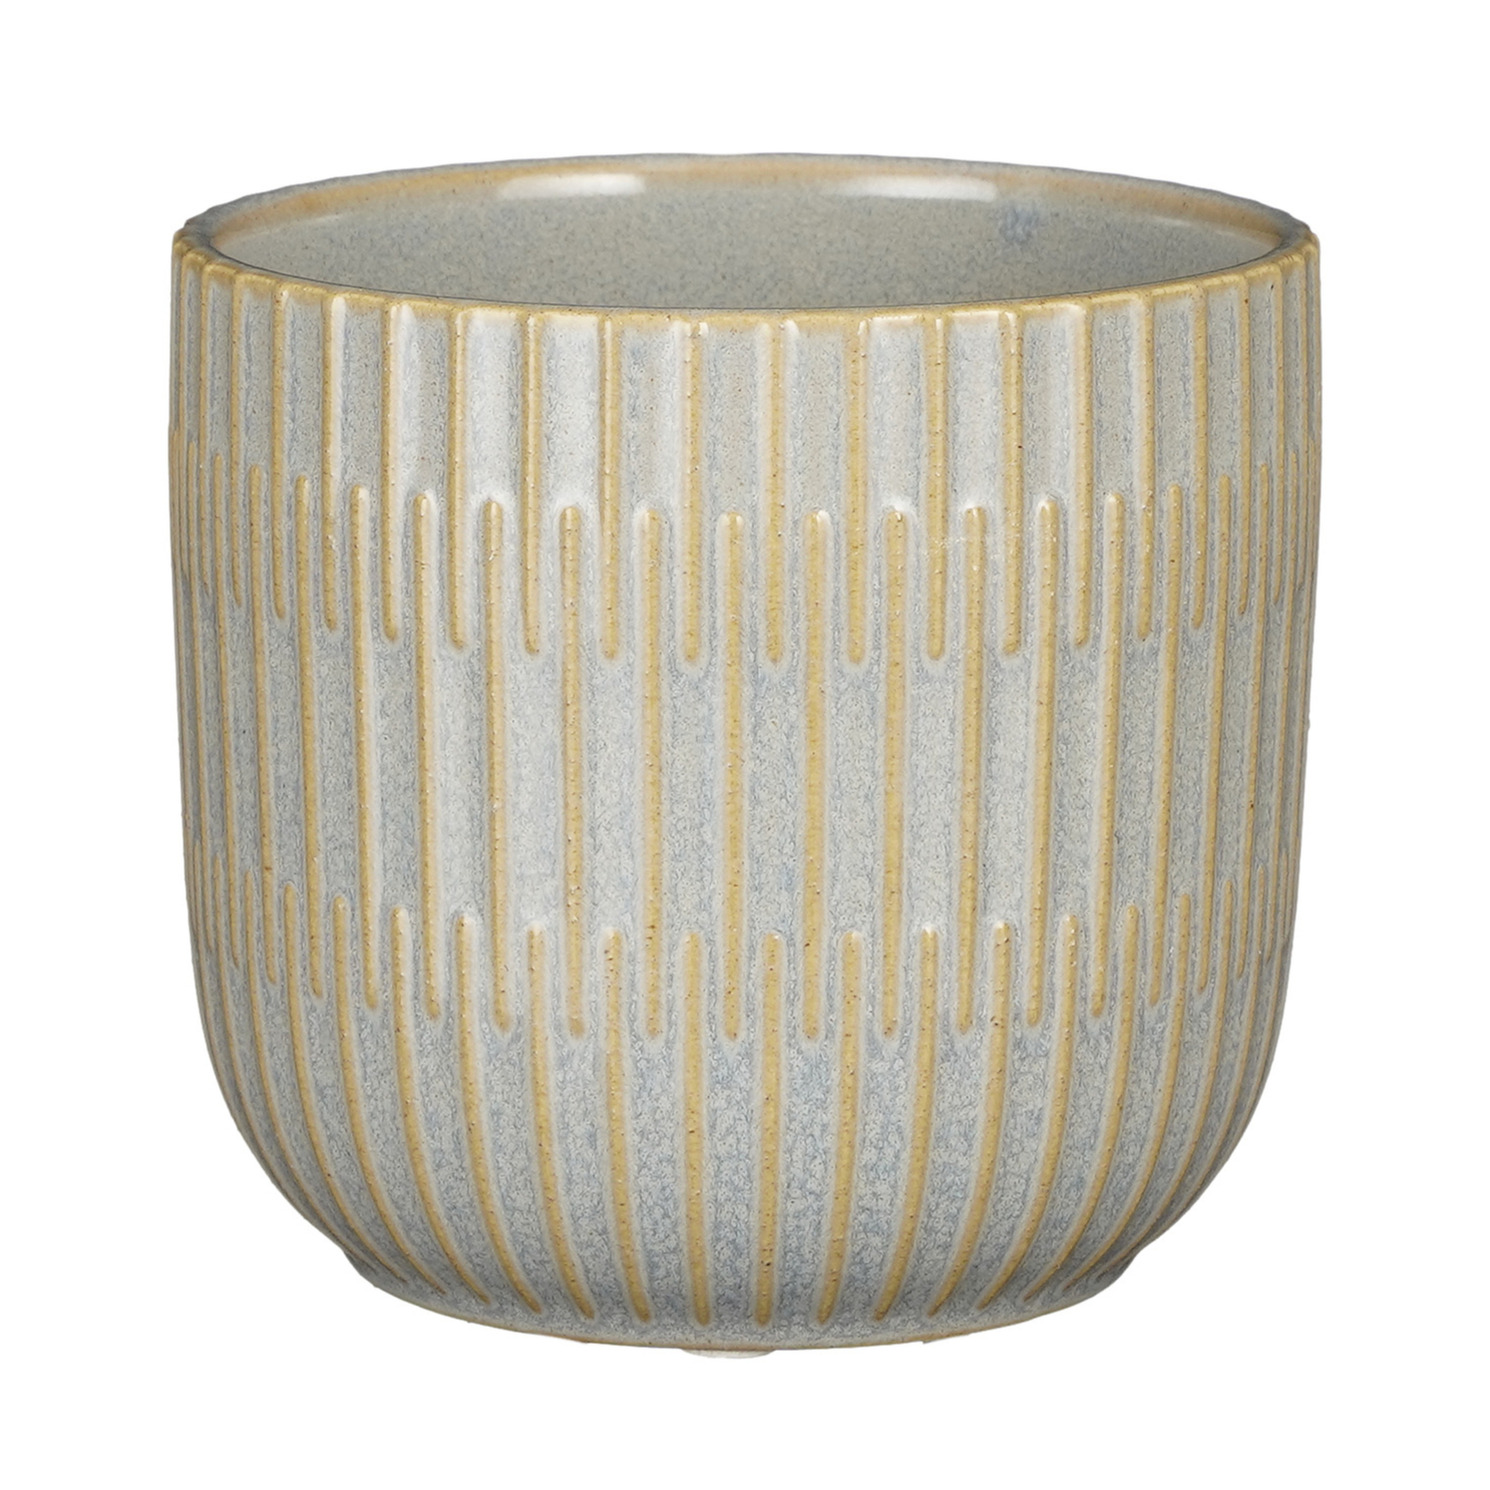 Mica Decorations Plantenpot/bloempot keramiek lichtgrijs stripes patroon - D12.5/H11 cm -